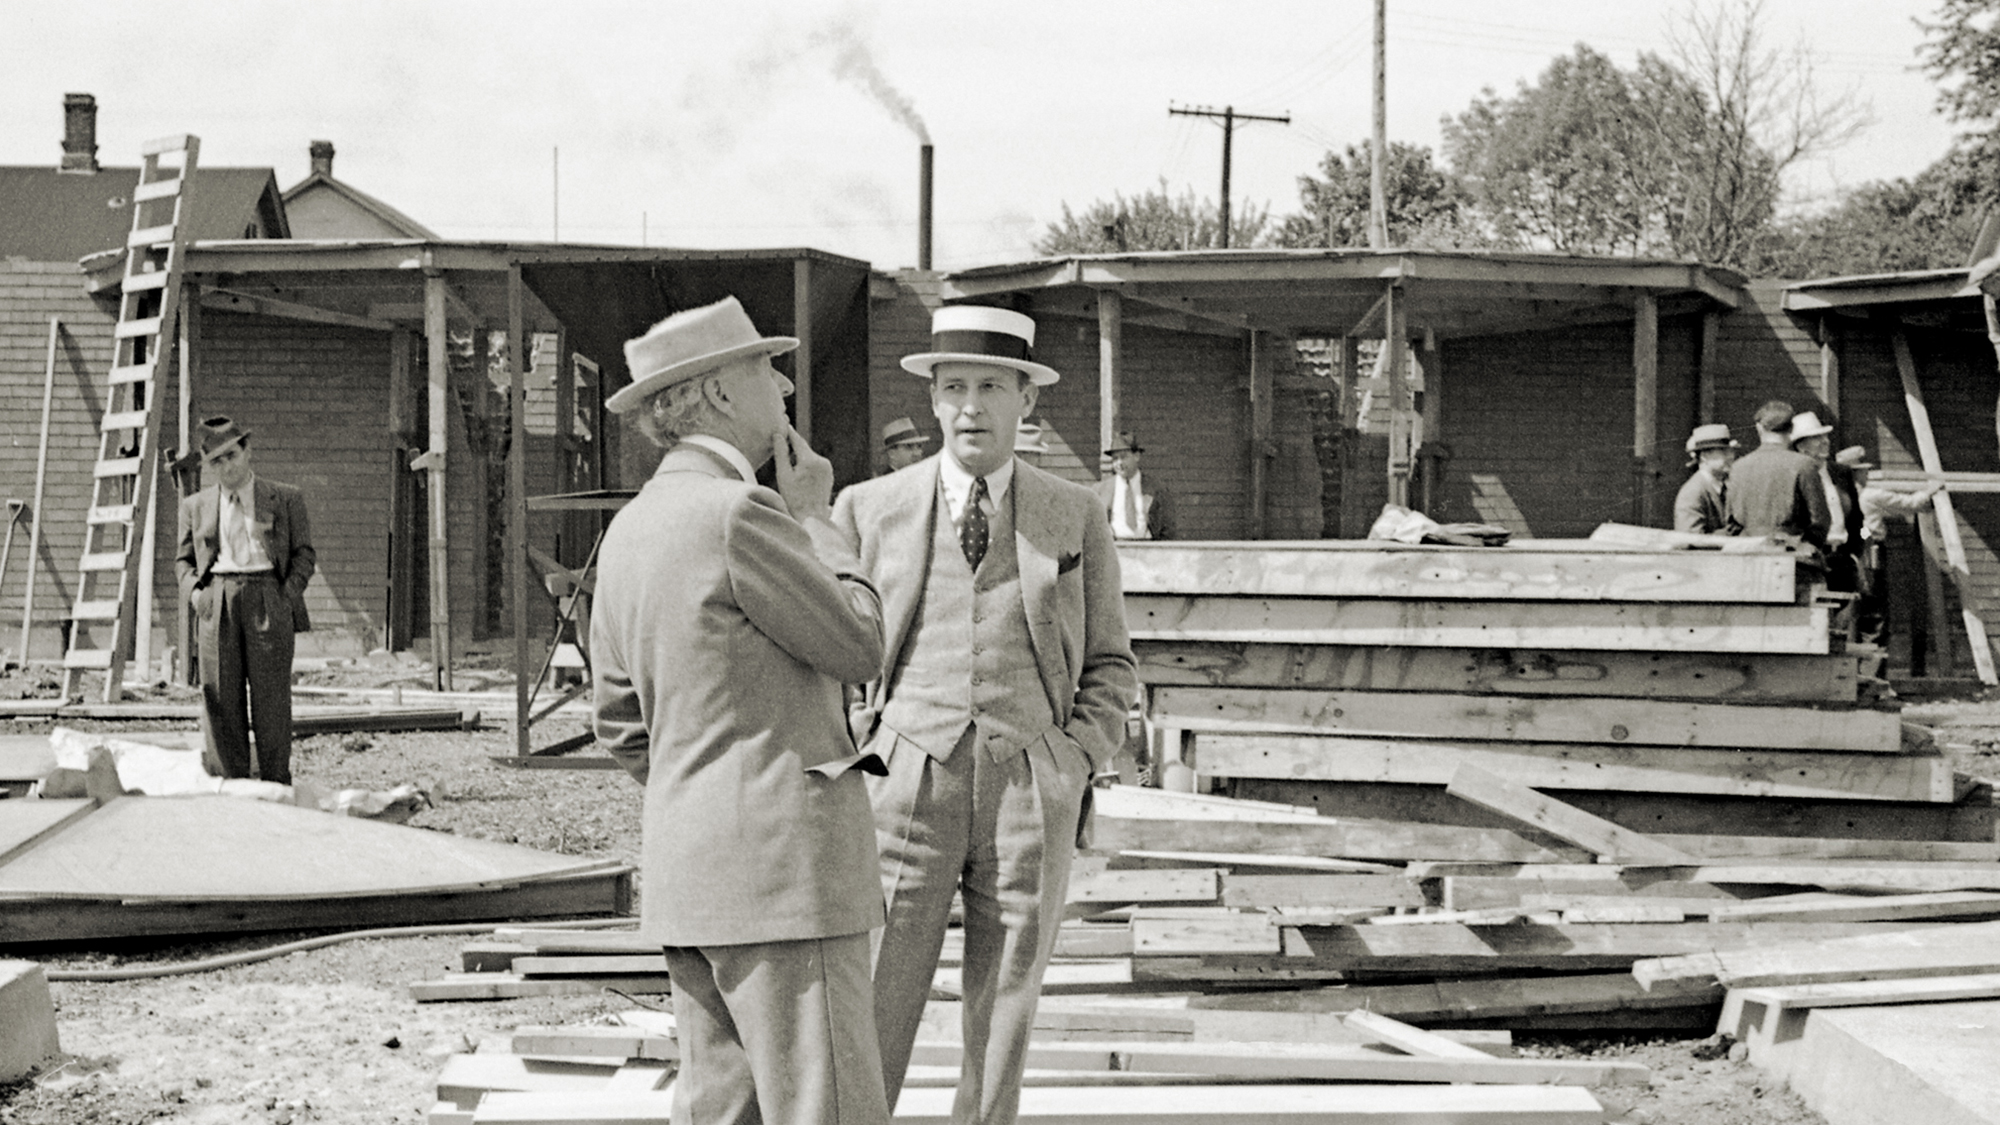 H.F. Johnson, Jr. and Frank Lloyd Wright, at SC Johnson